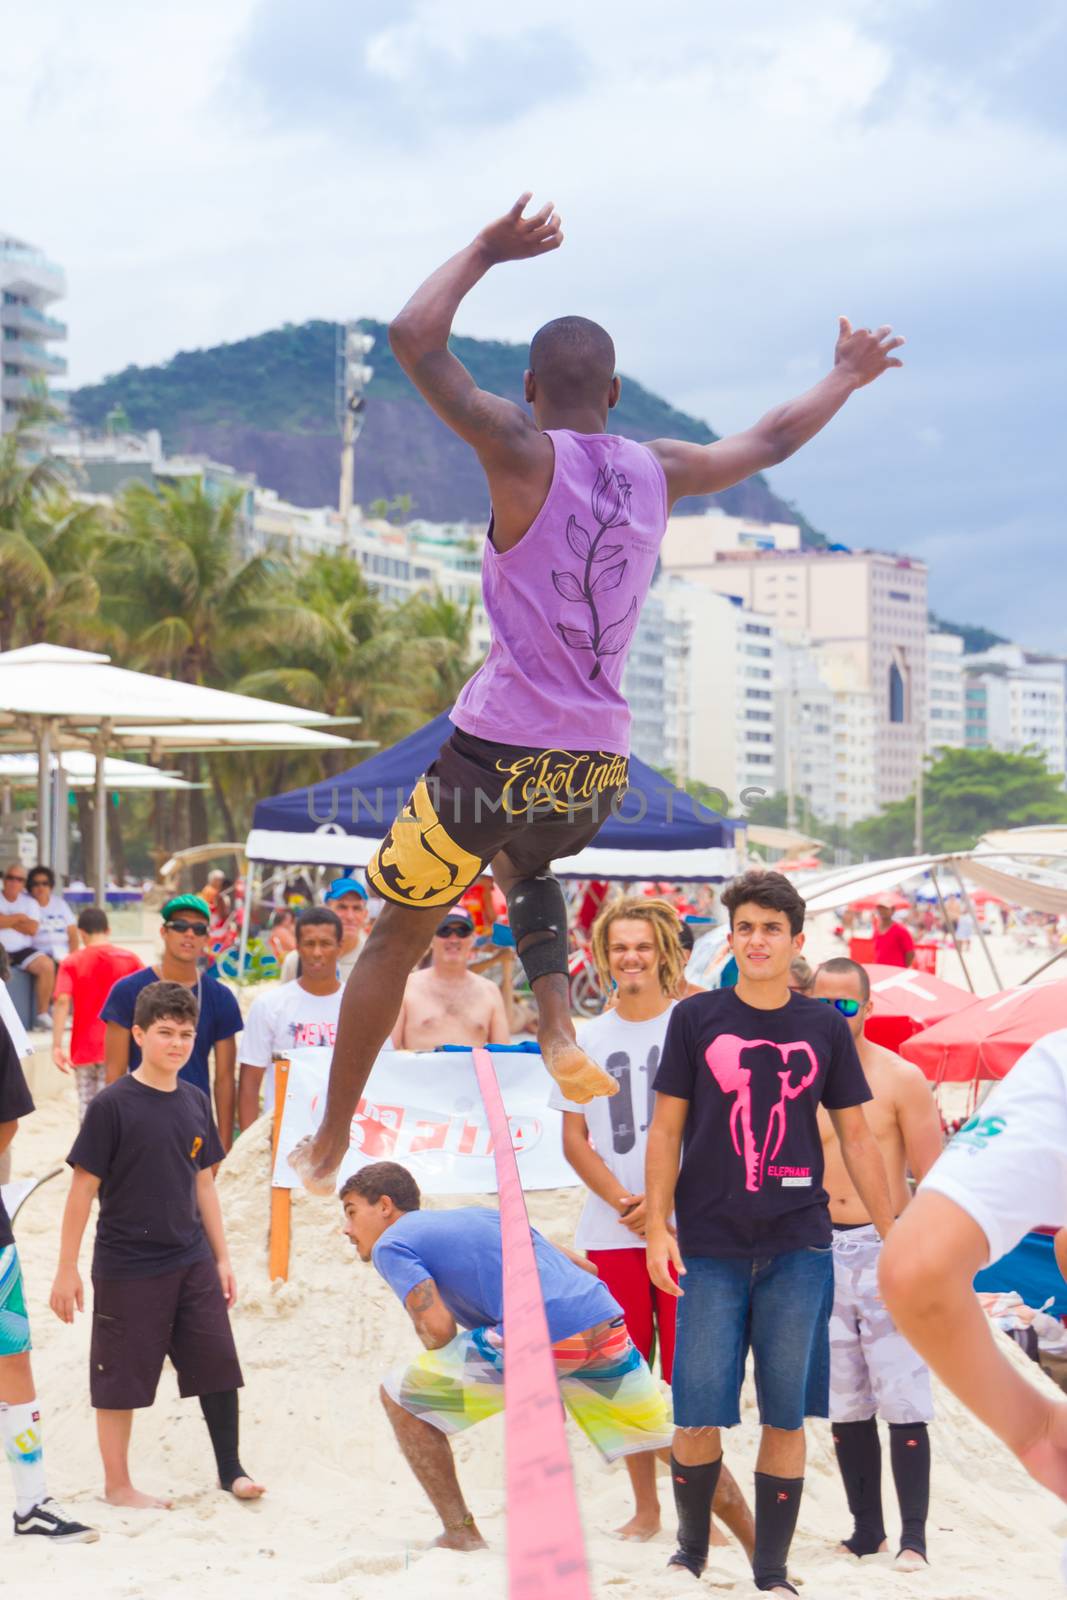 Slackline on Copacabana beach, Rio de Janeiro by kasto